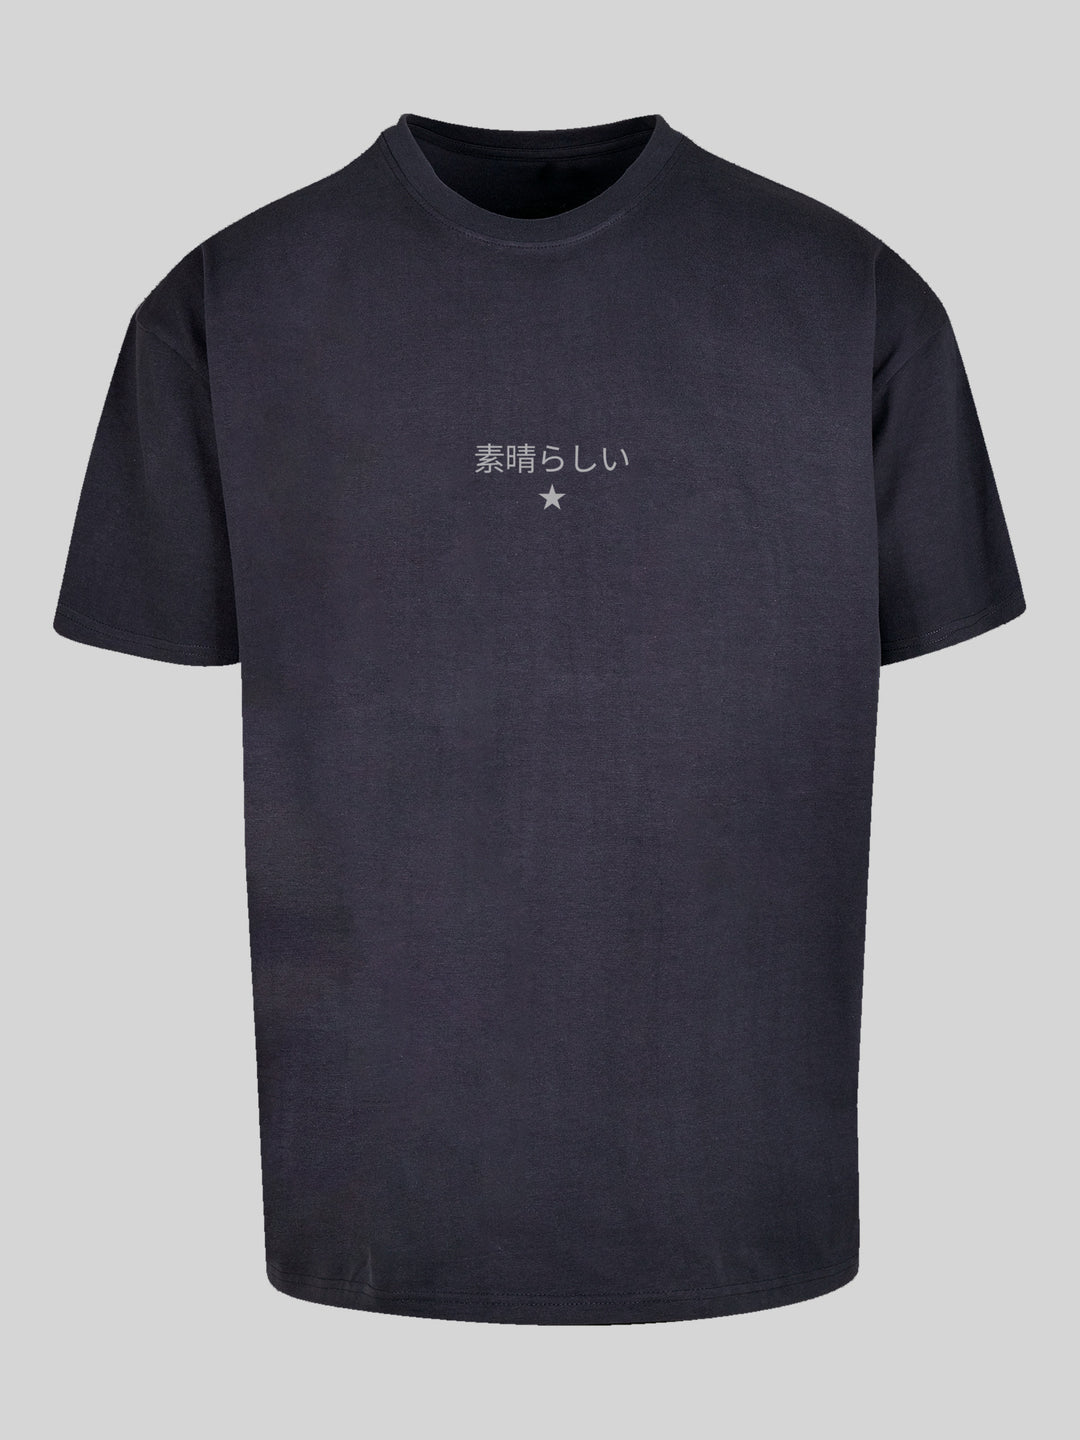 Kanagawa Welle | Oversize Herren T-Shirt